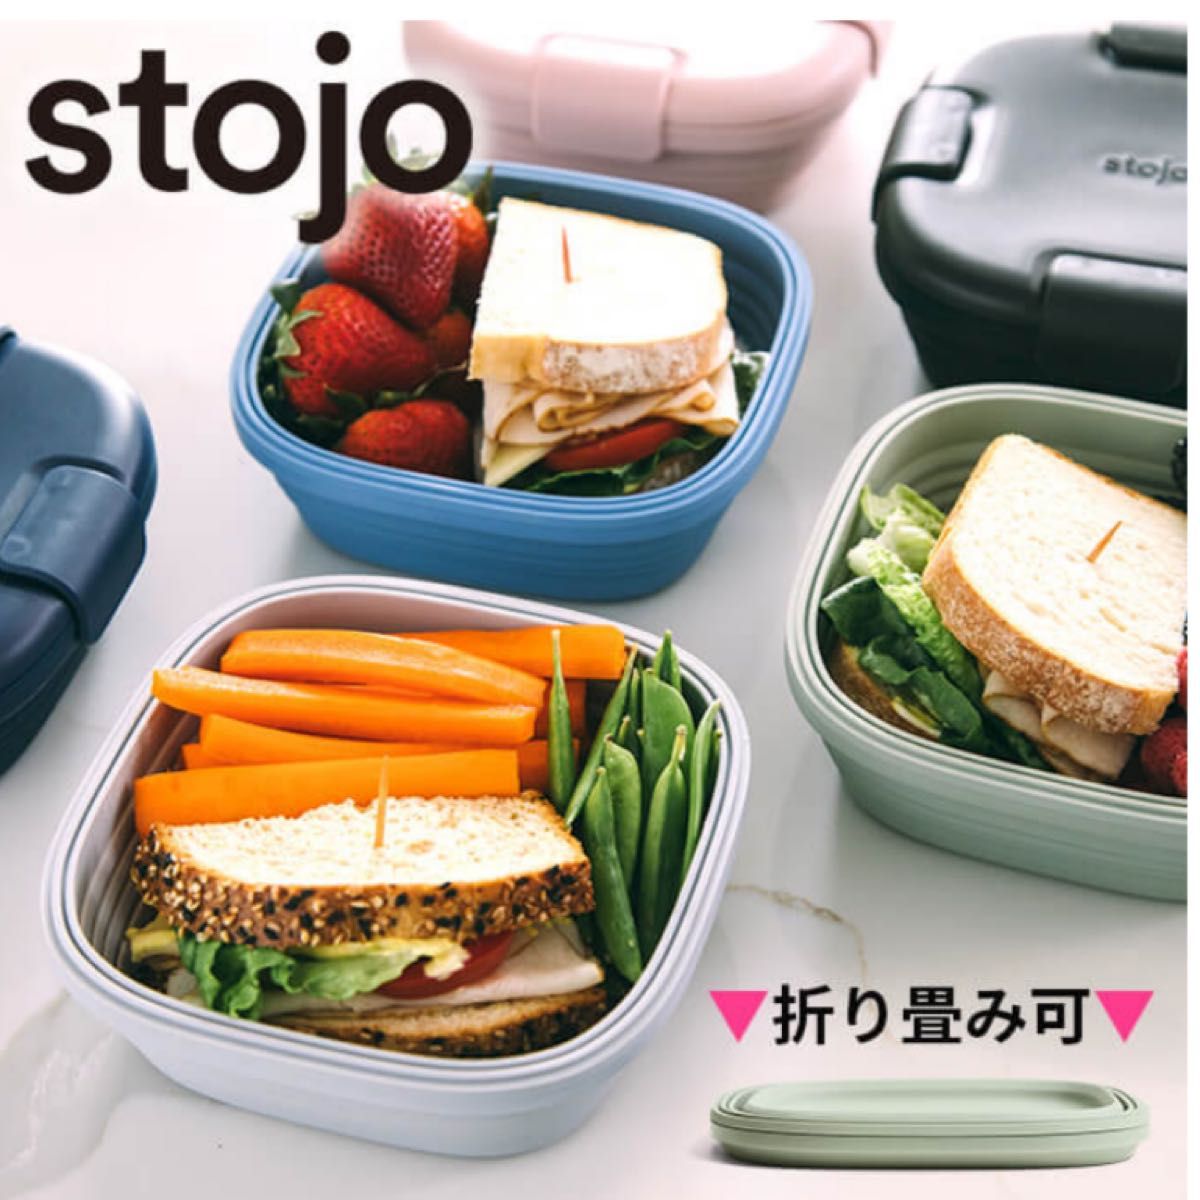 stojo ストージョ box 折りたたみ 弁当箱 食洗機対応 電子レンジ 冷凍庫 対応 軽量